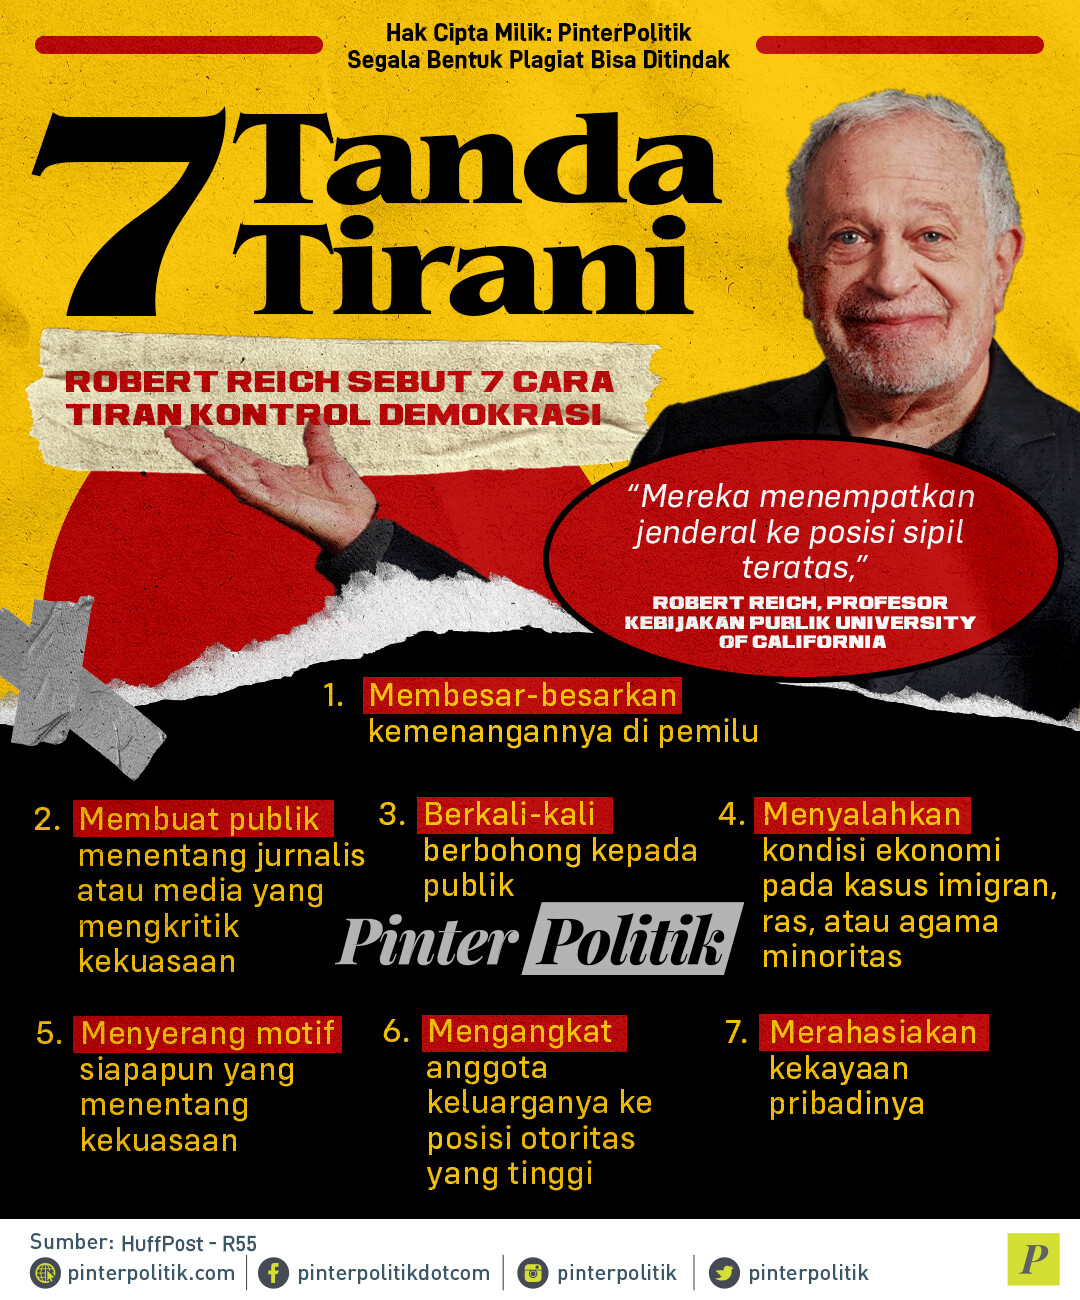 infografis 7 tanda tirani